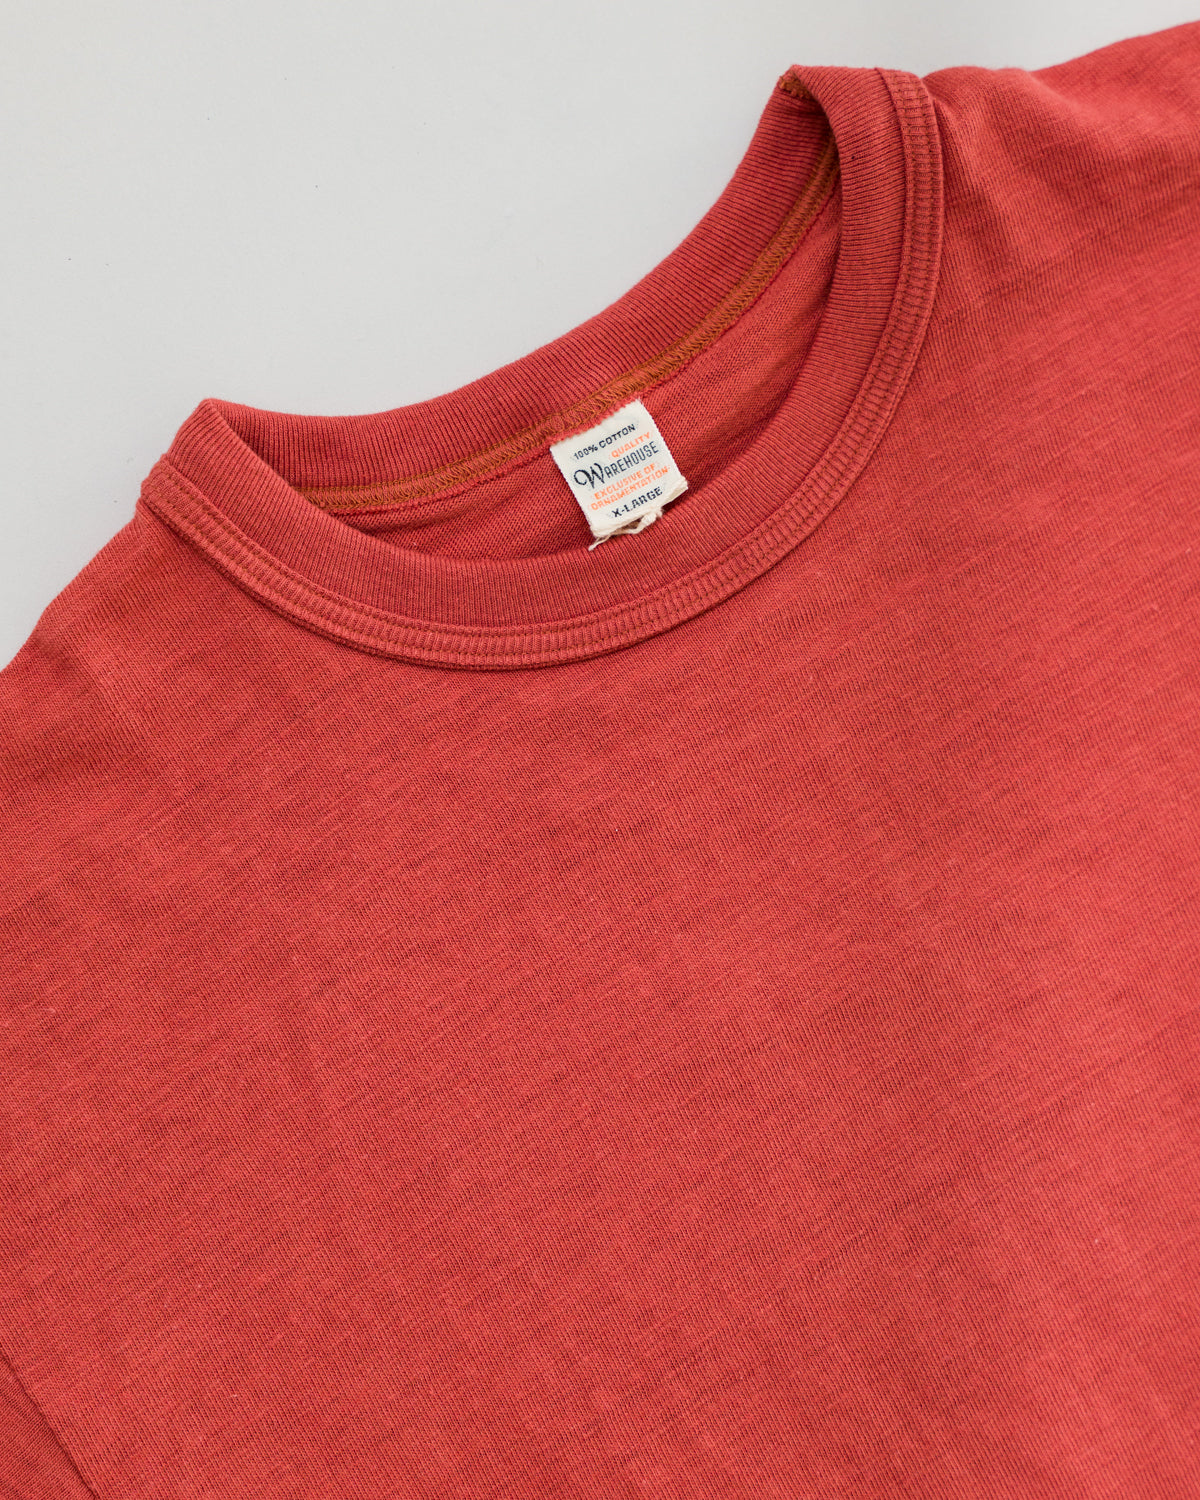 Lot 4601 - Slubby Cotton T-Shirt - Salmon